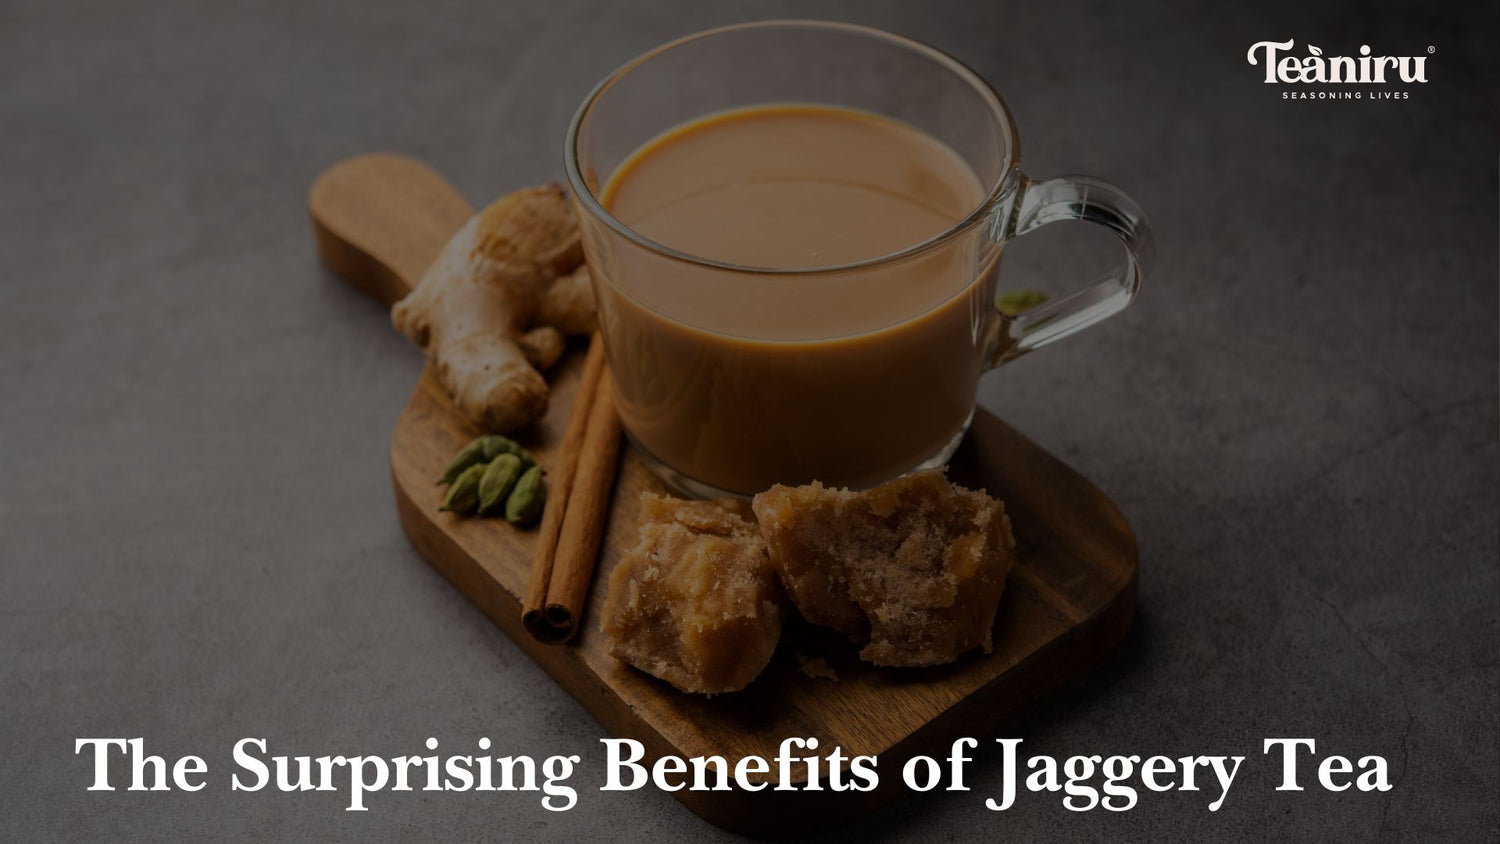 Benefits of gud-ki chai